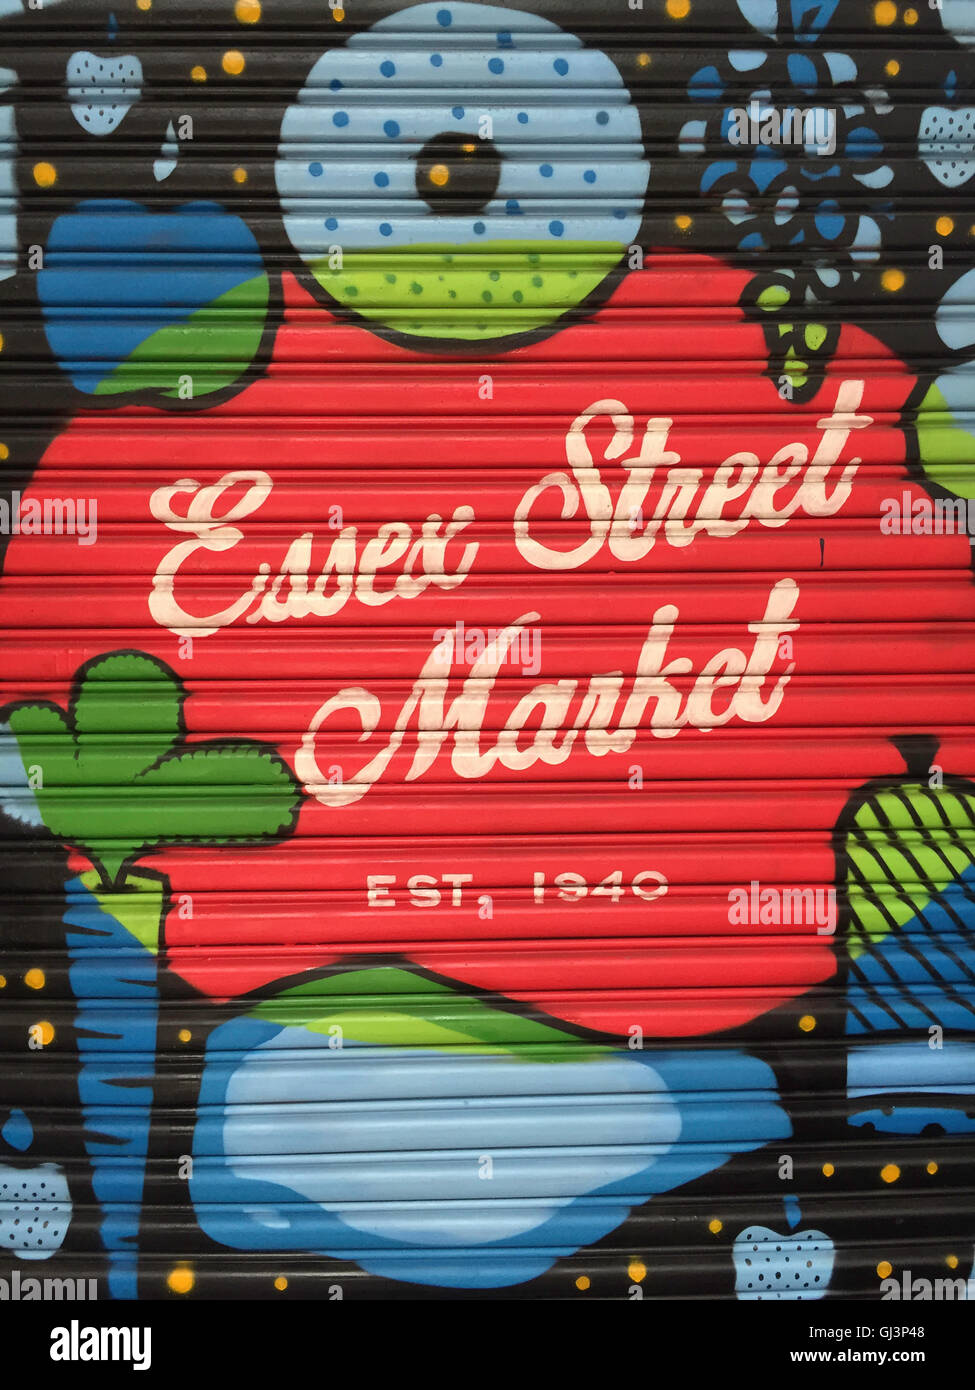 Essex Street Market, NYC Stock Photo